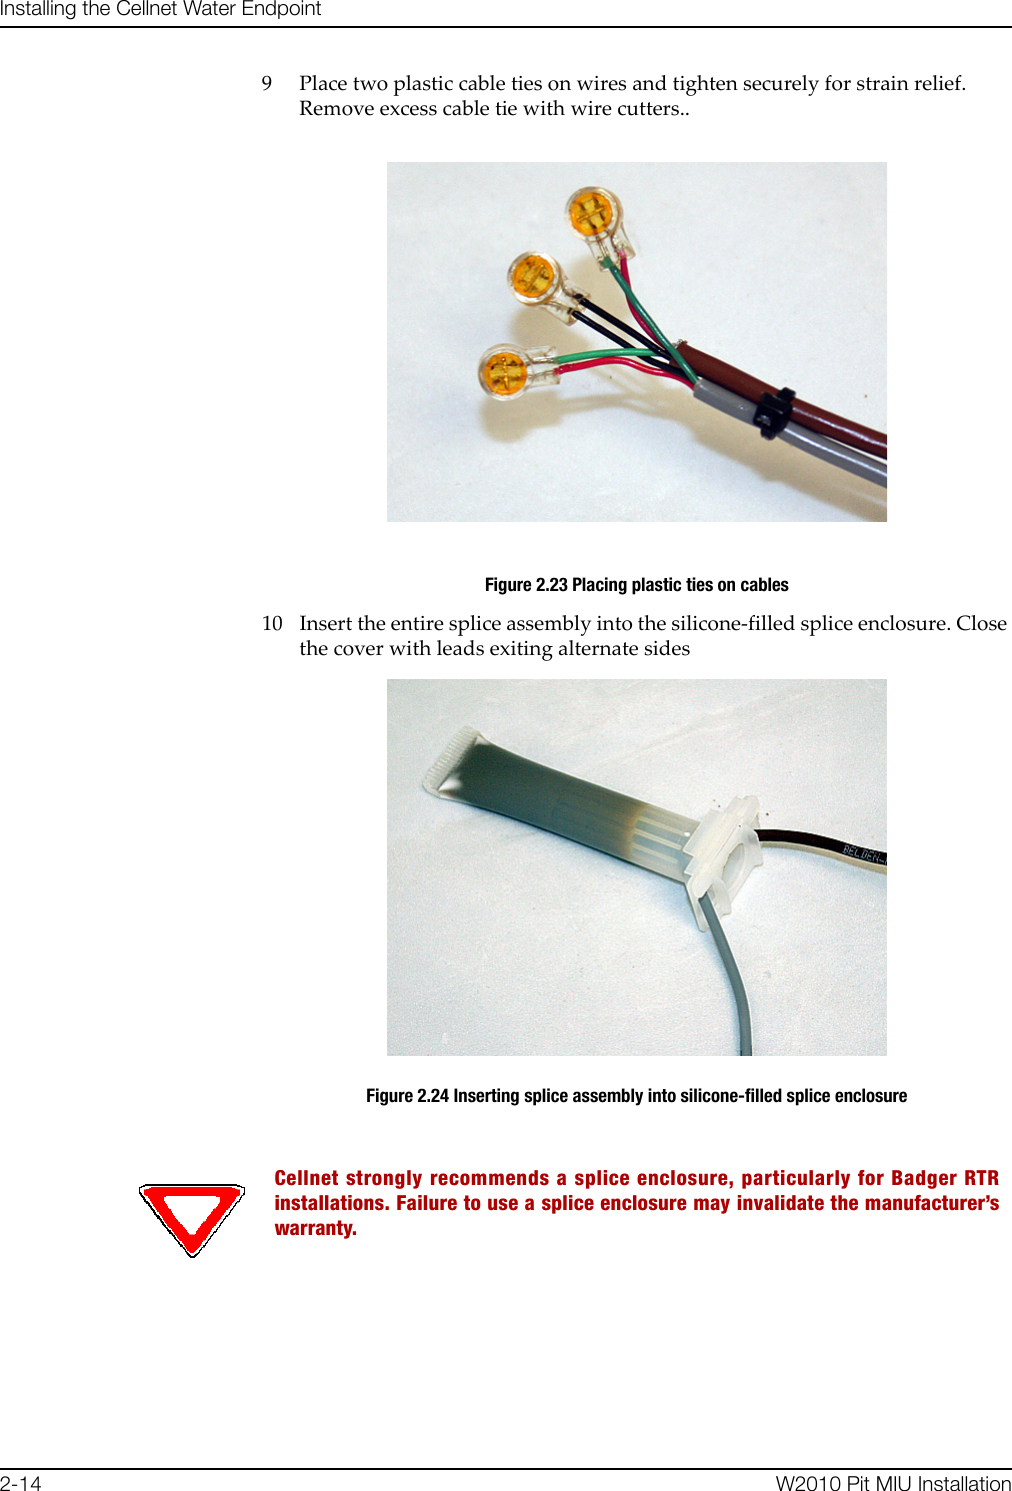 fåëí~ääáåÖ=íÜÉ=`ÉääåÉí=t~íÉê=båÇéçáåíOJNQ tOMNM=máí=jfr=fåëí~ää~íáçå9 Place two plastic cable ties on wires and tighten securely for strain relief. Remove excess cable tie with wire cutters..Figure 2.23 Placing plastic ties on cables10 Insert the entire splice assembly into the silicone-filled splice enclosure. Close the cover with leads exiting alternate sidesFigure 2.24 Inserting splice assembly into silicone-filled splice enclosureCellnet strongly recommends a splice enclosure, particularly for Badger RTRinstallations. Failure to use a splice enclosure may invalidate the manufacturer’swarranty.